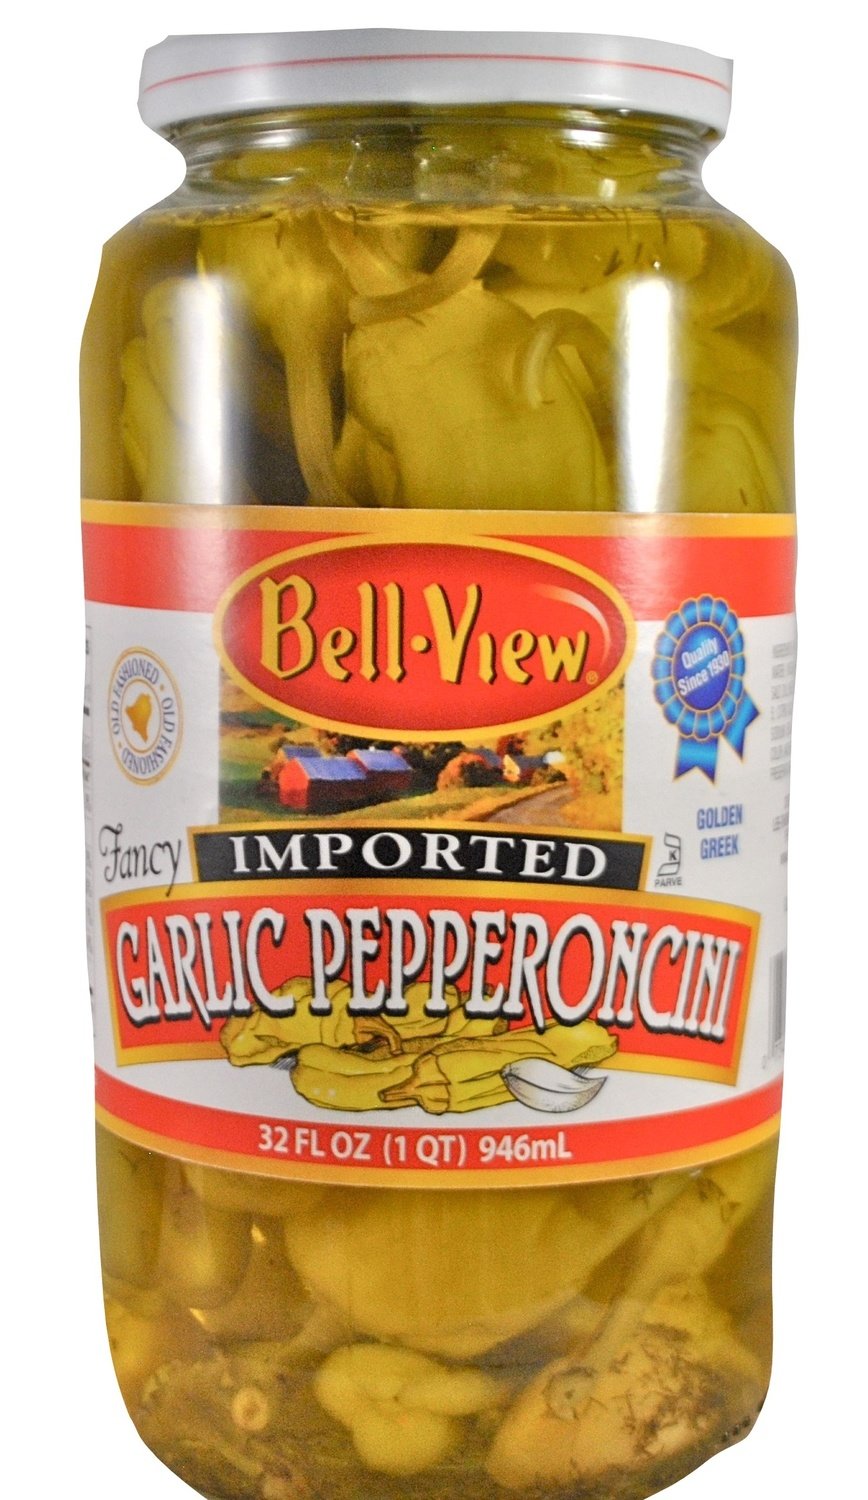 Bell View Garlic Pepperoncini